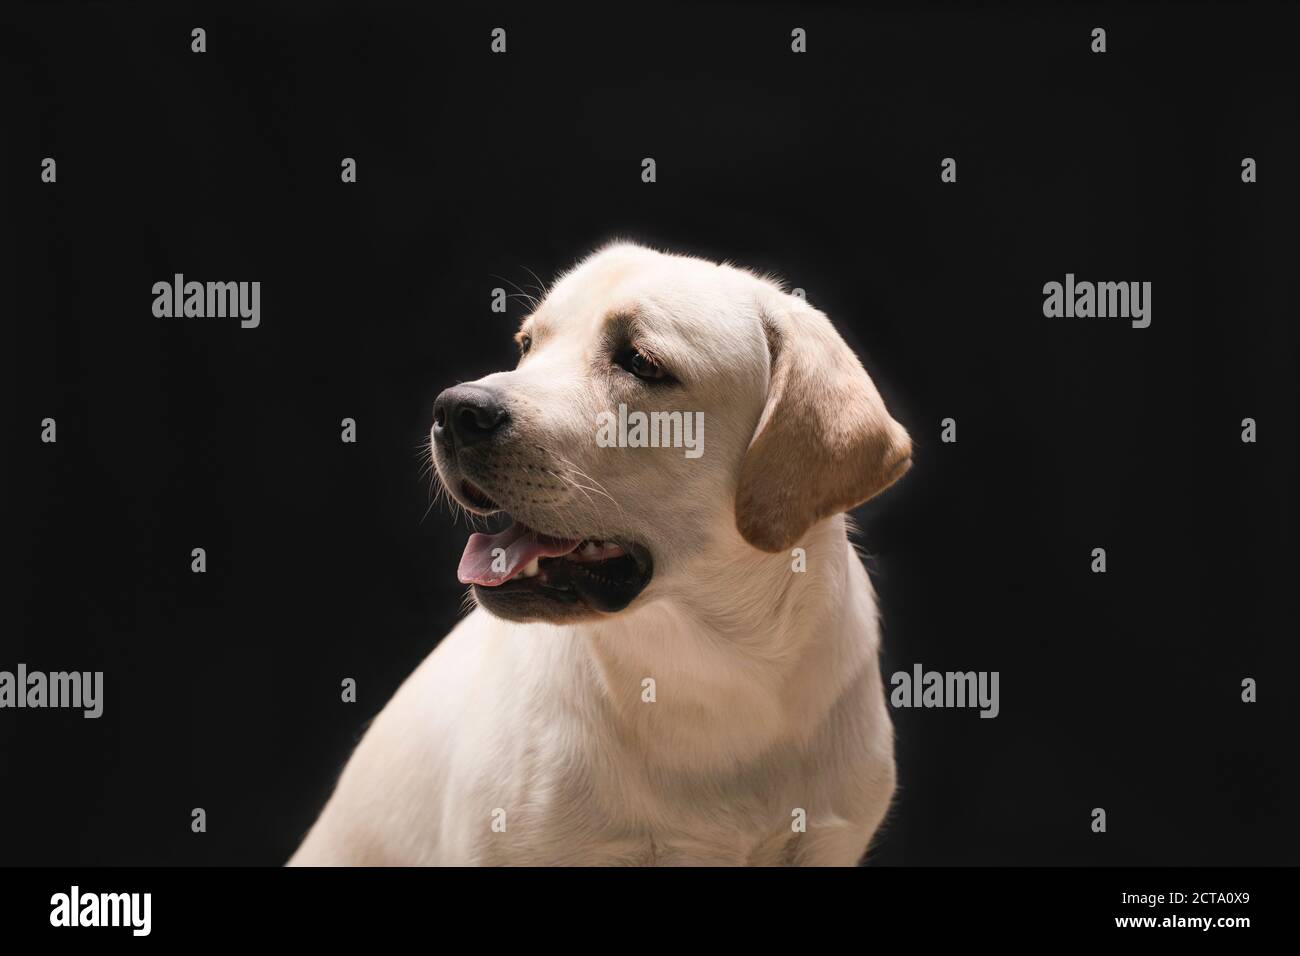 joven perro labrador cachorro en estudio sobre fondo negro de cabeza disparos perfil vertical Foto de stock